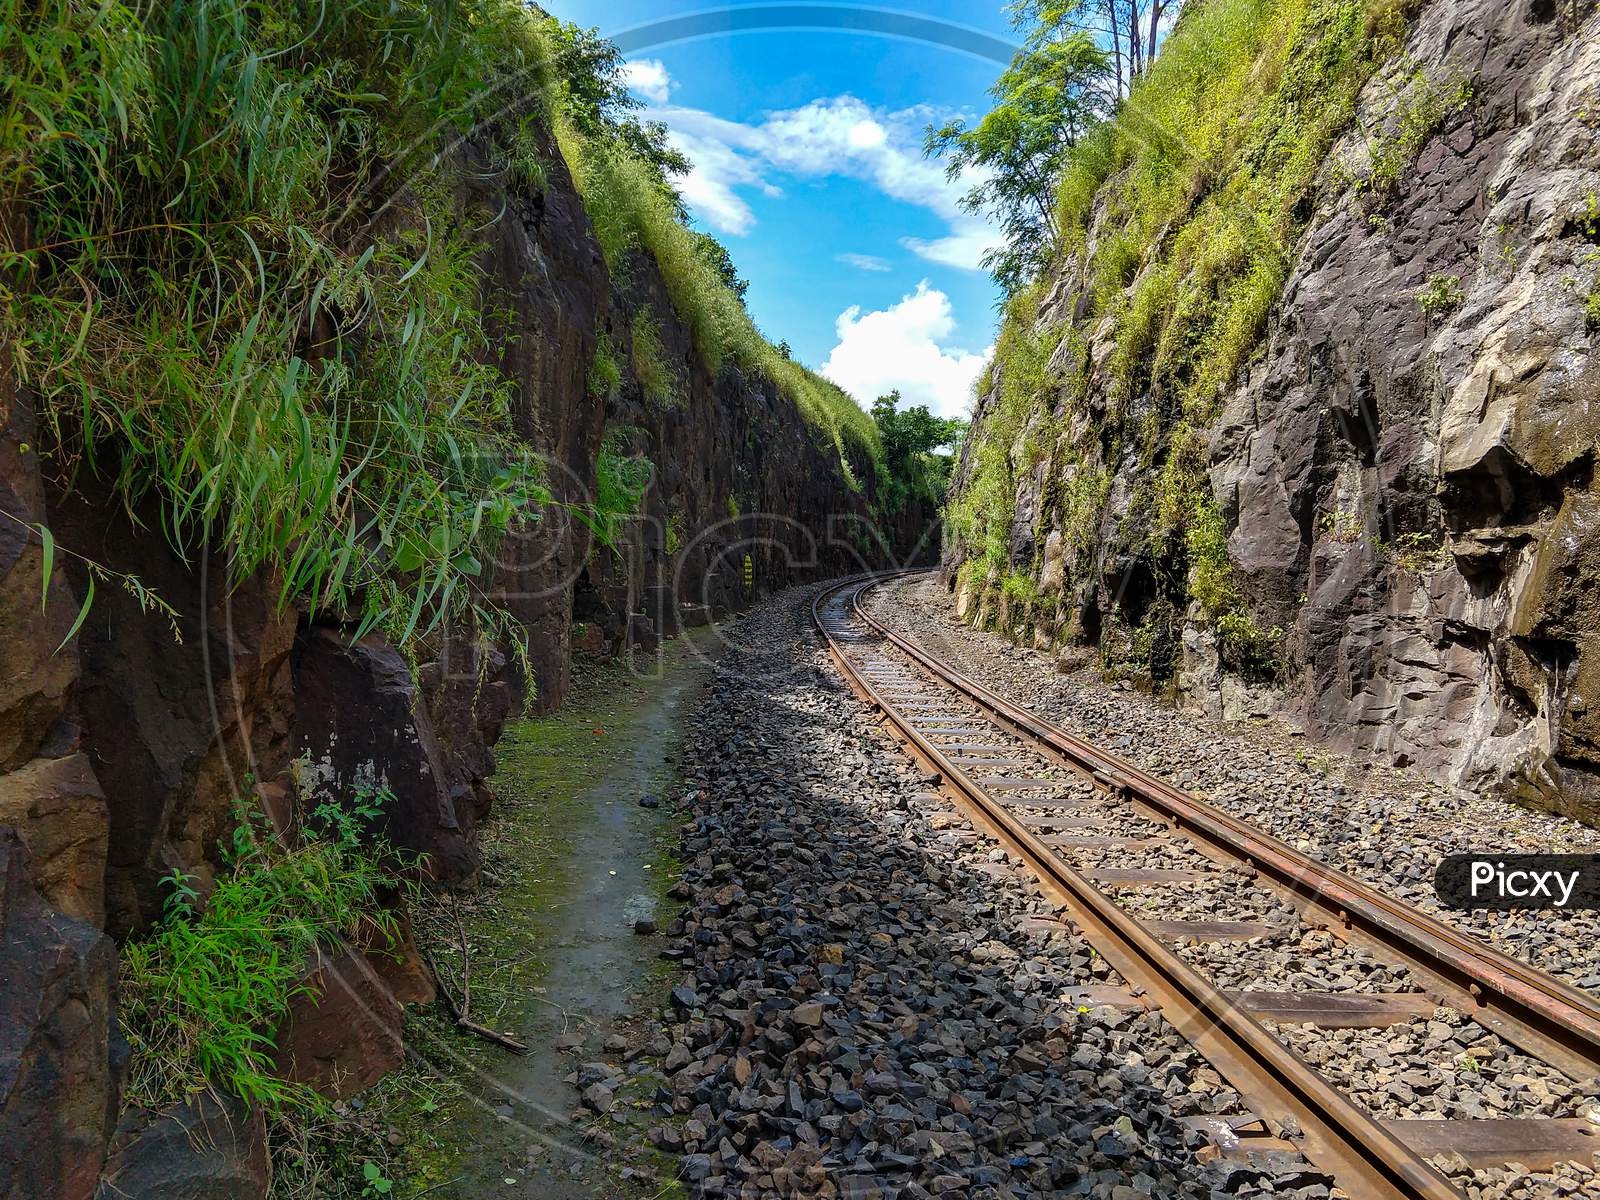 Meter Gauge Railway Tracks In Between Hills- Indore, Madhya Pradesh, India